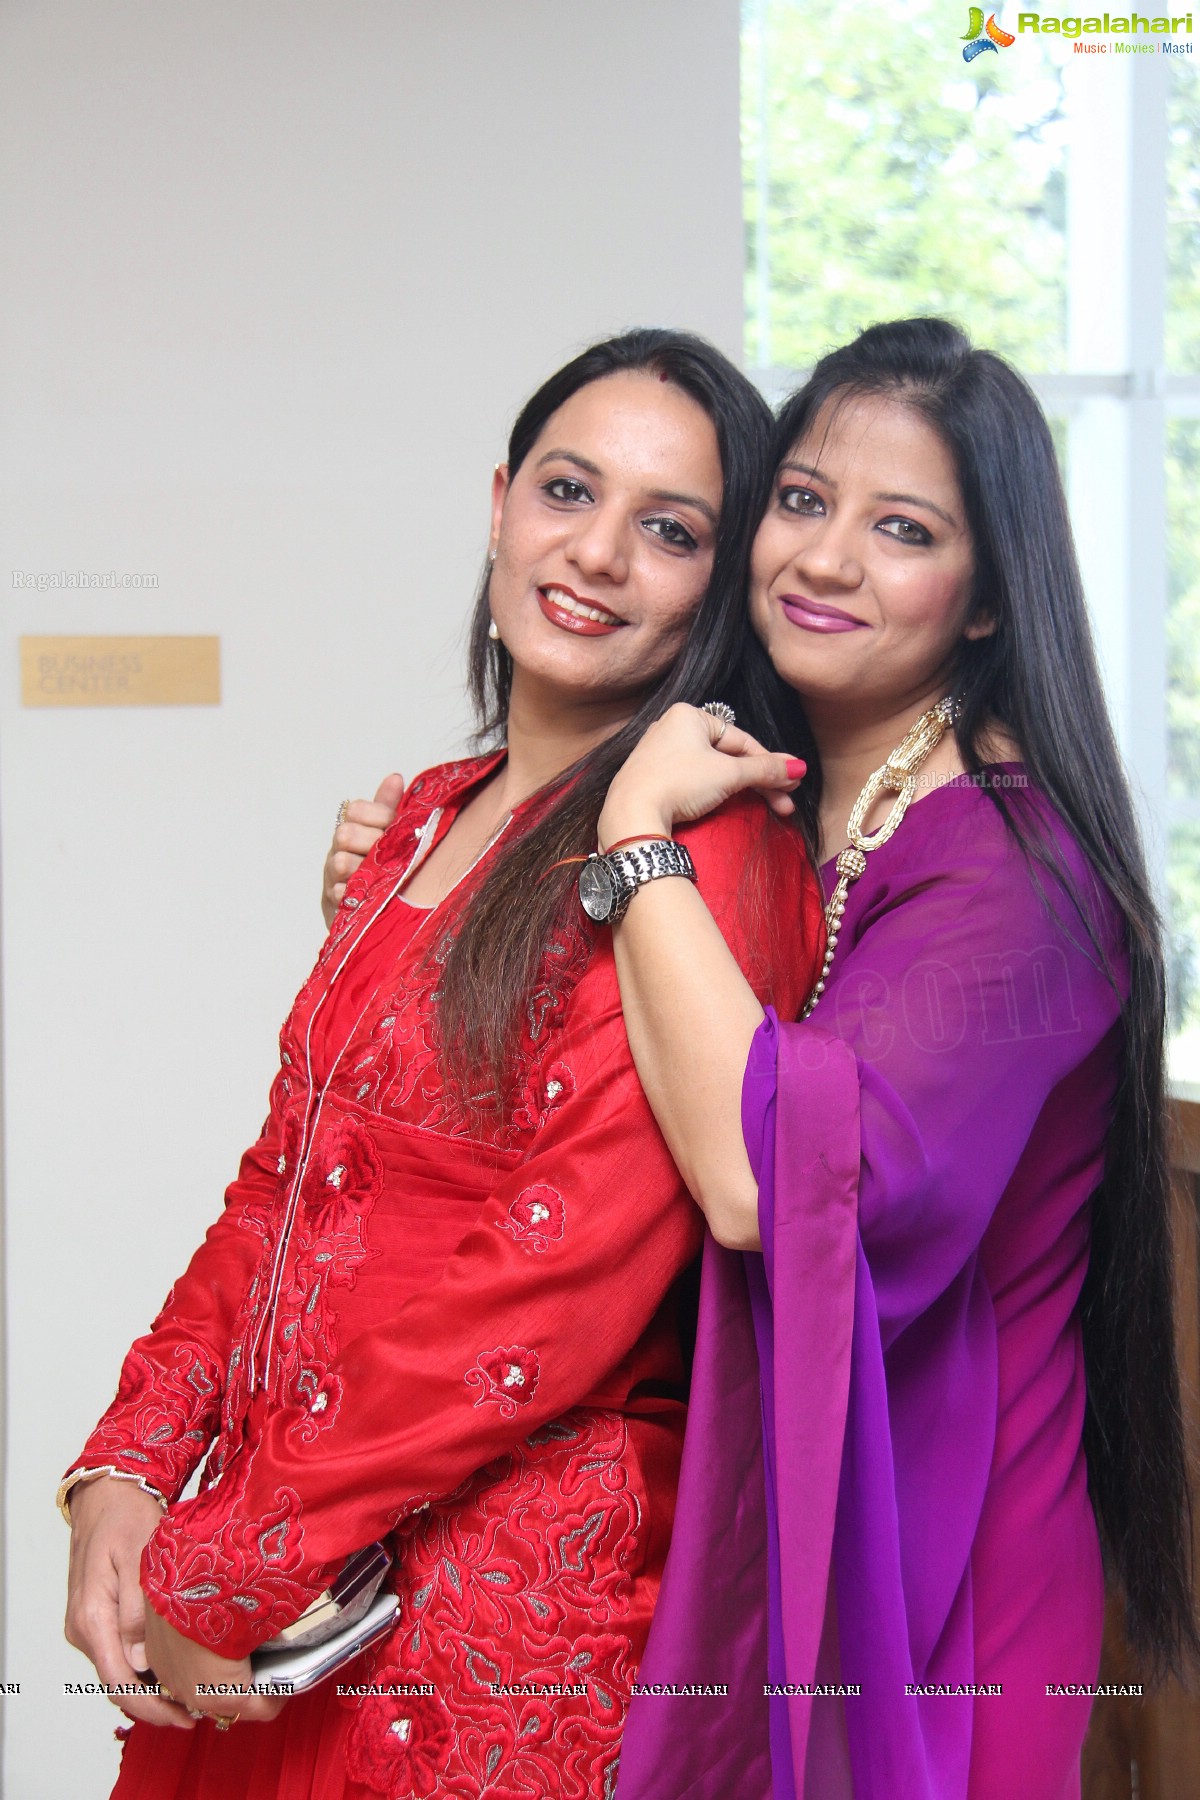 Gorgeous Girls Club's Party by Sonia Sobti and Shikha Dusaj